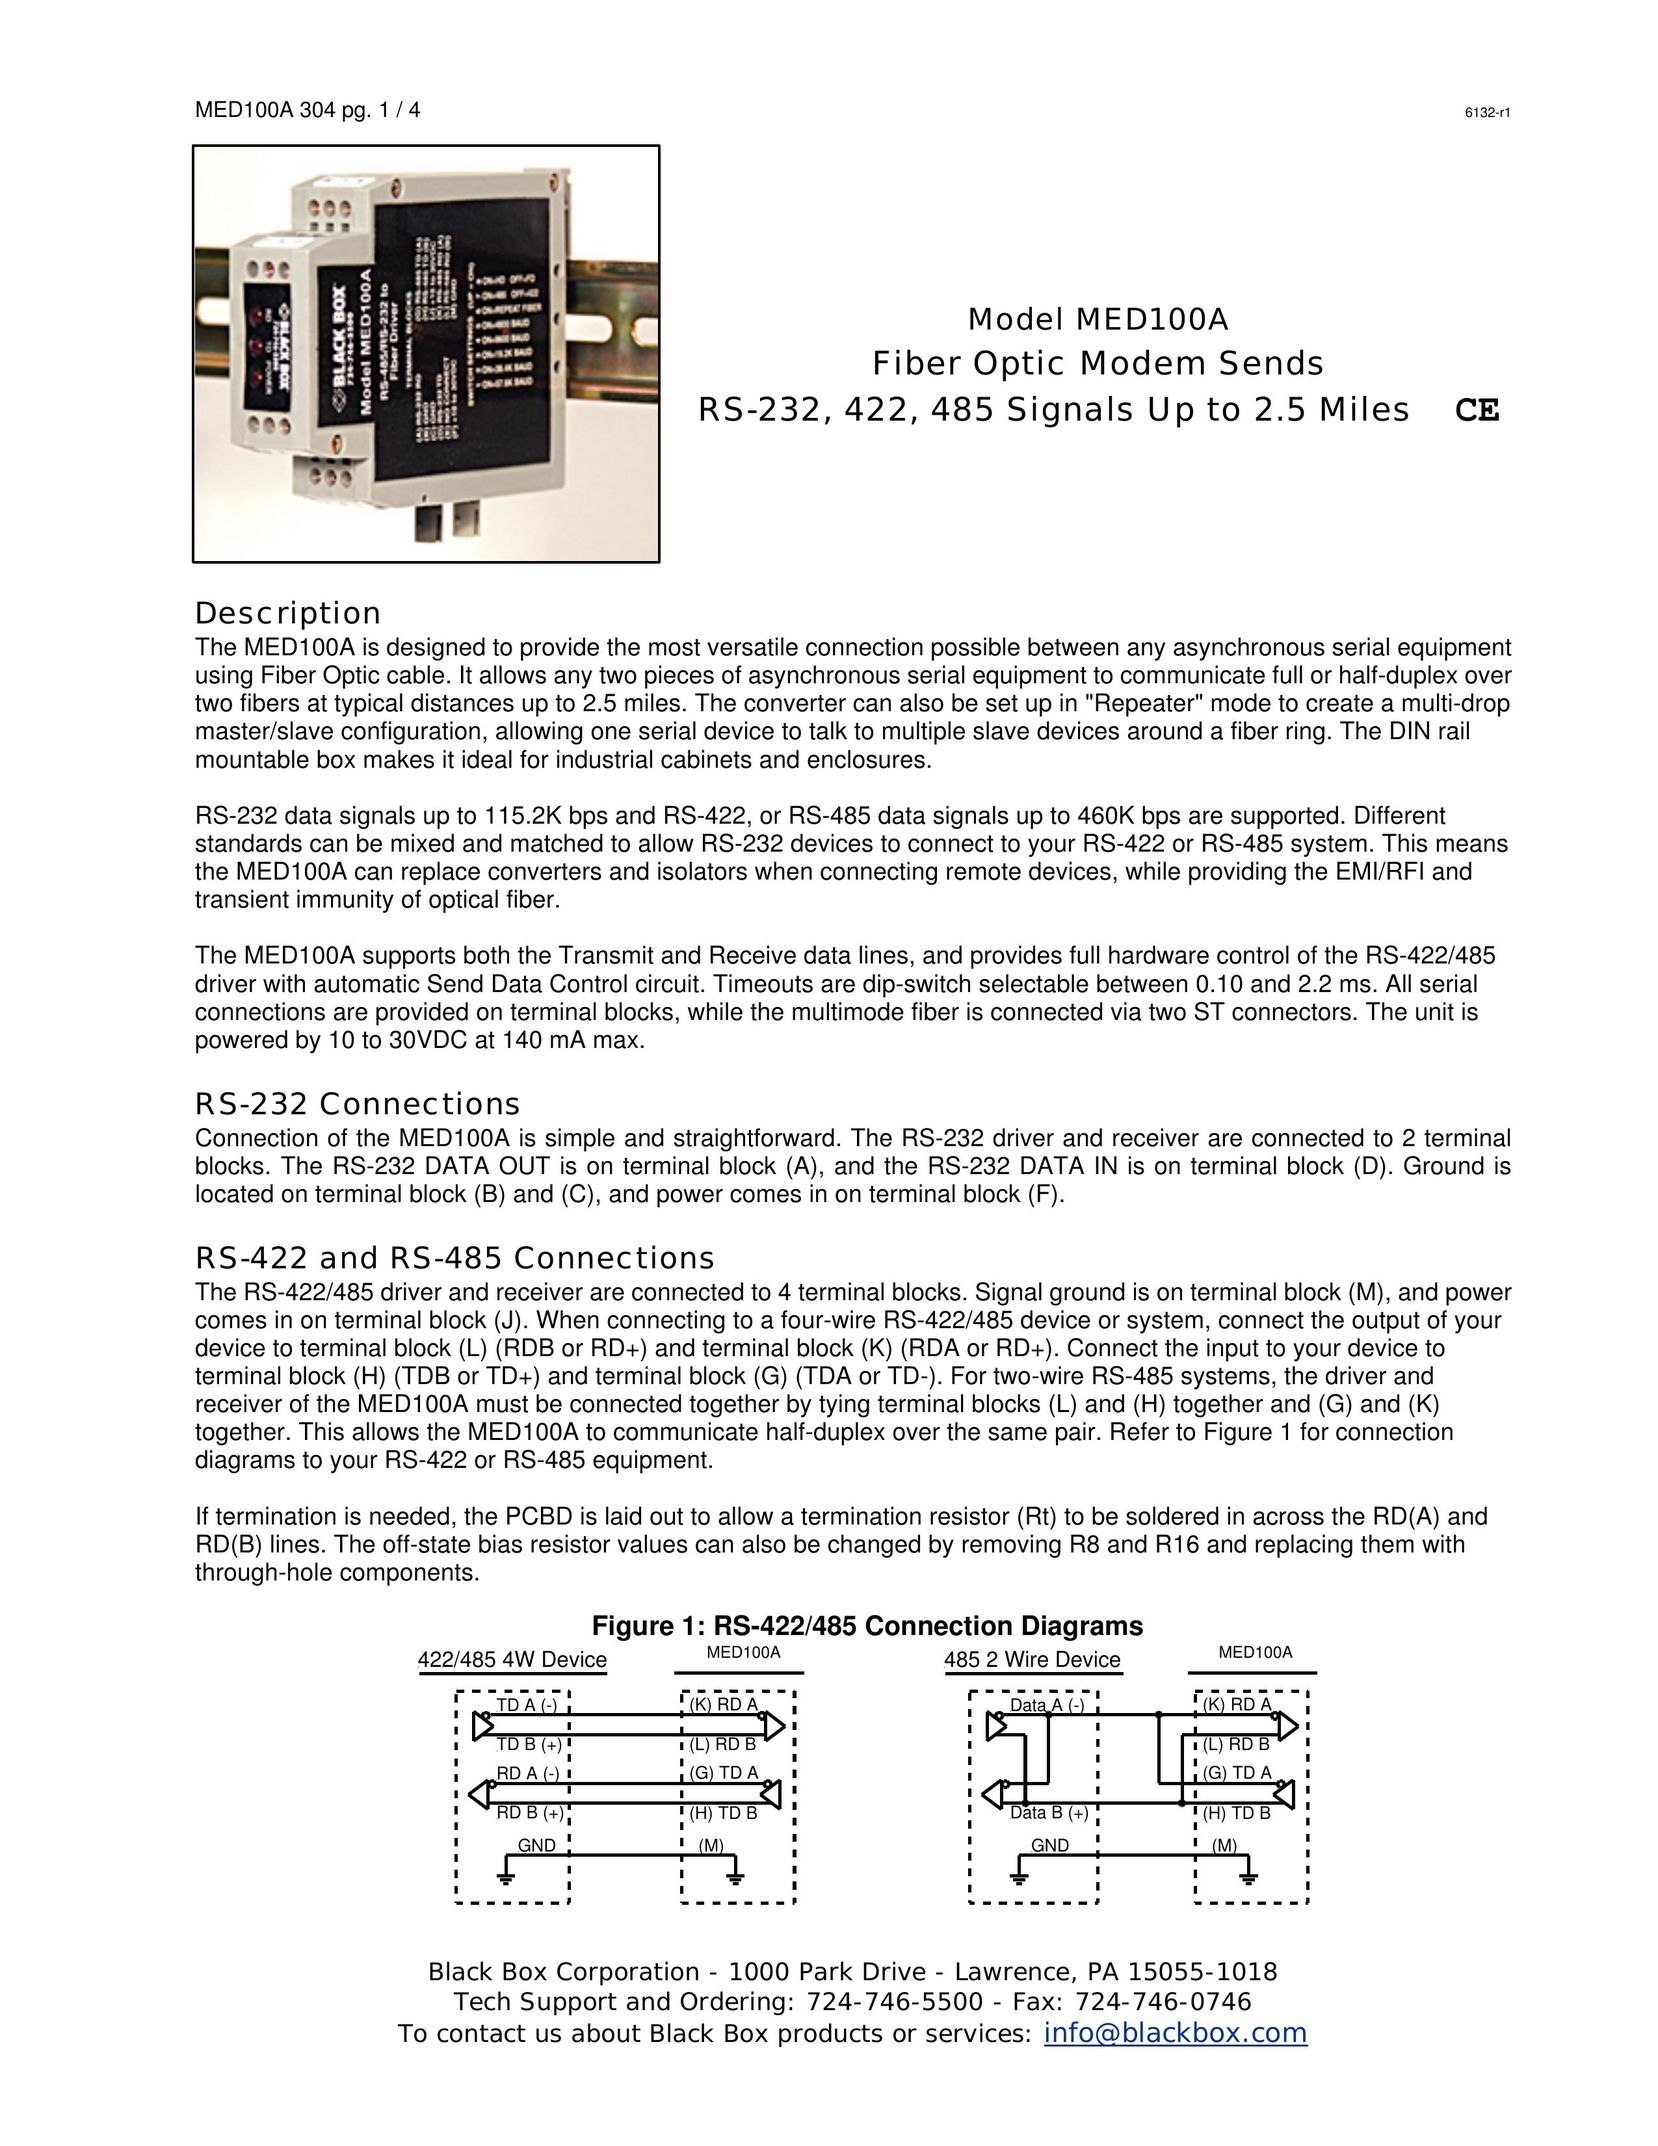 Black Box Fiber Optic Modem Modem User Manual